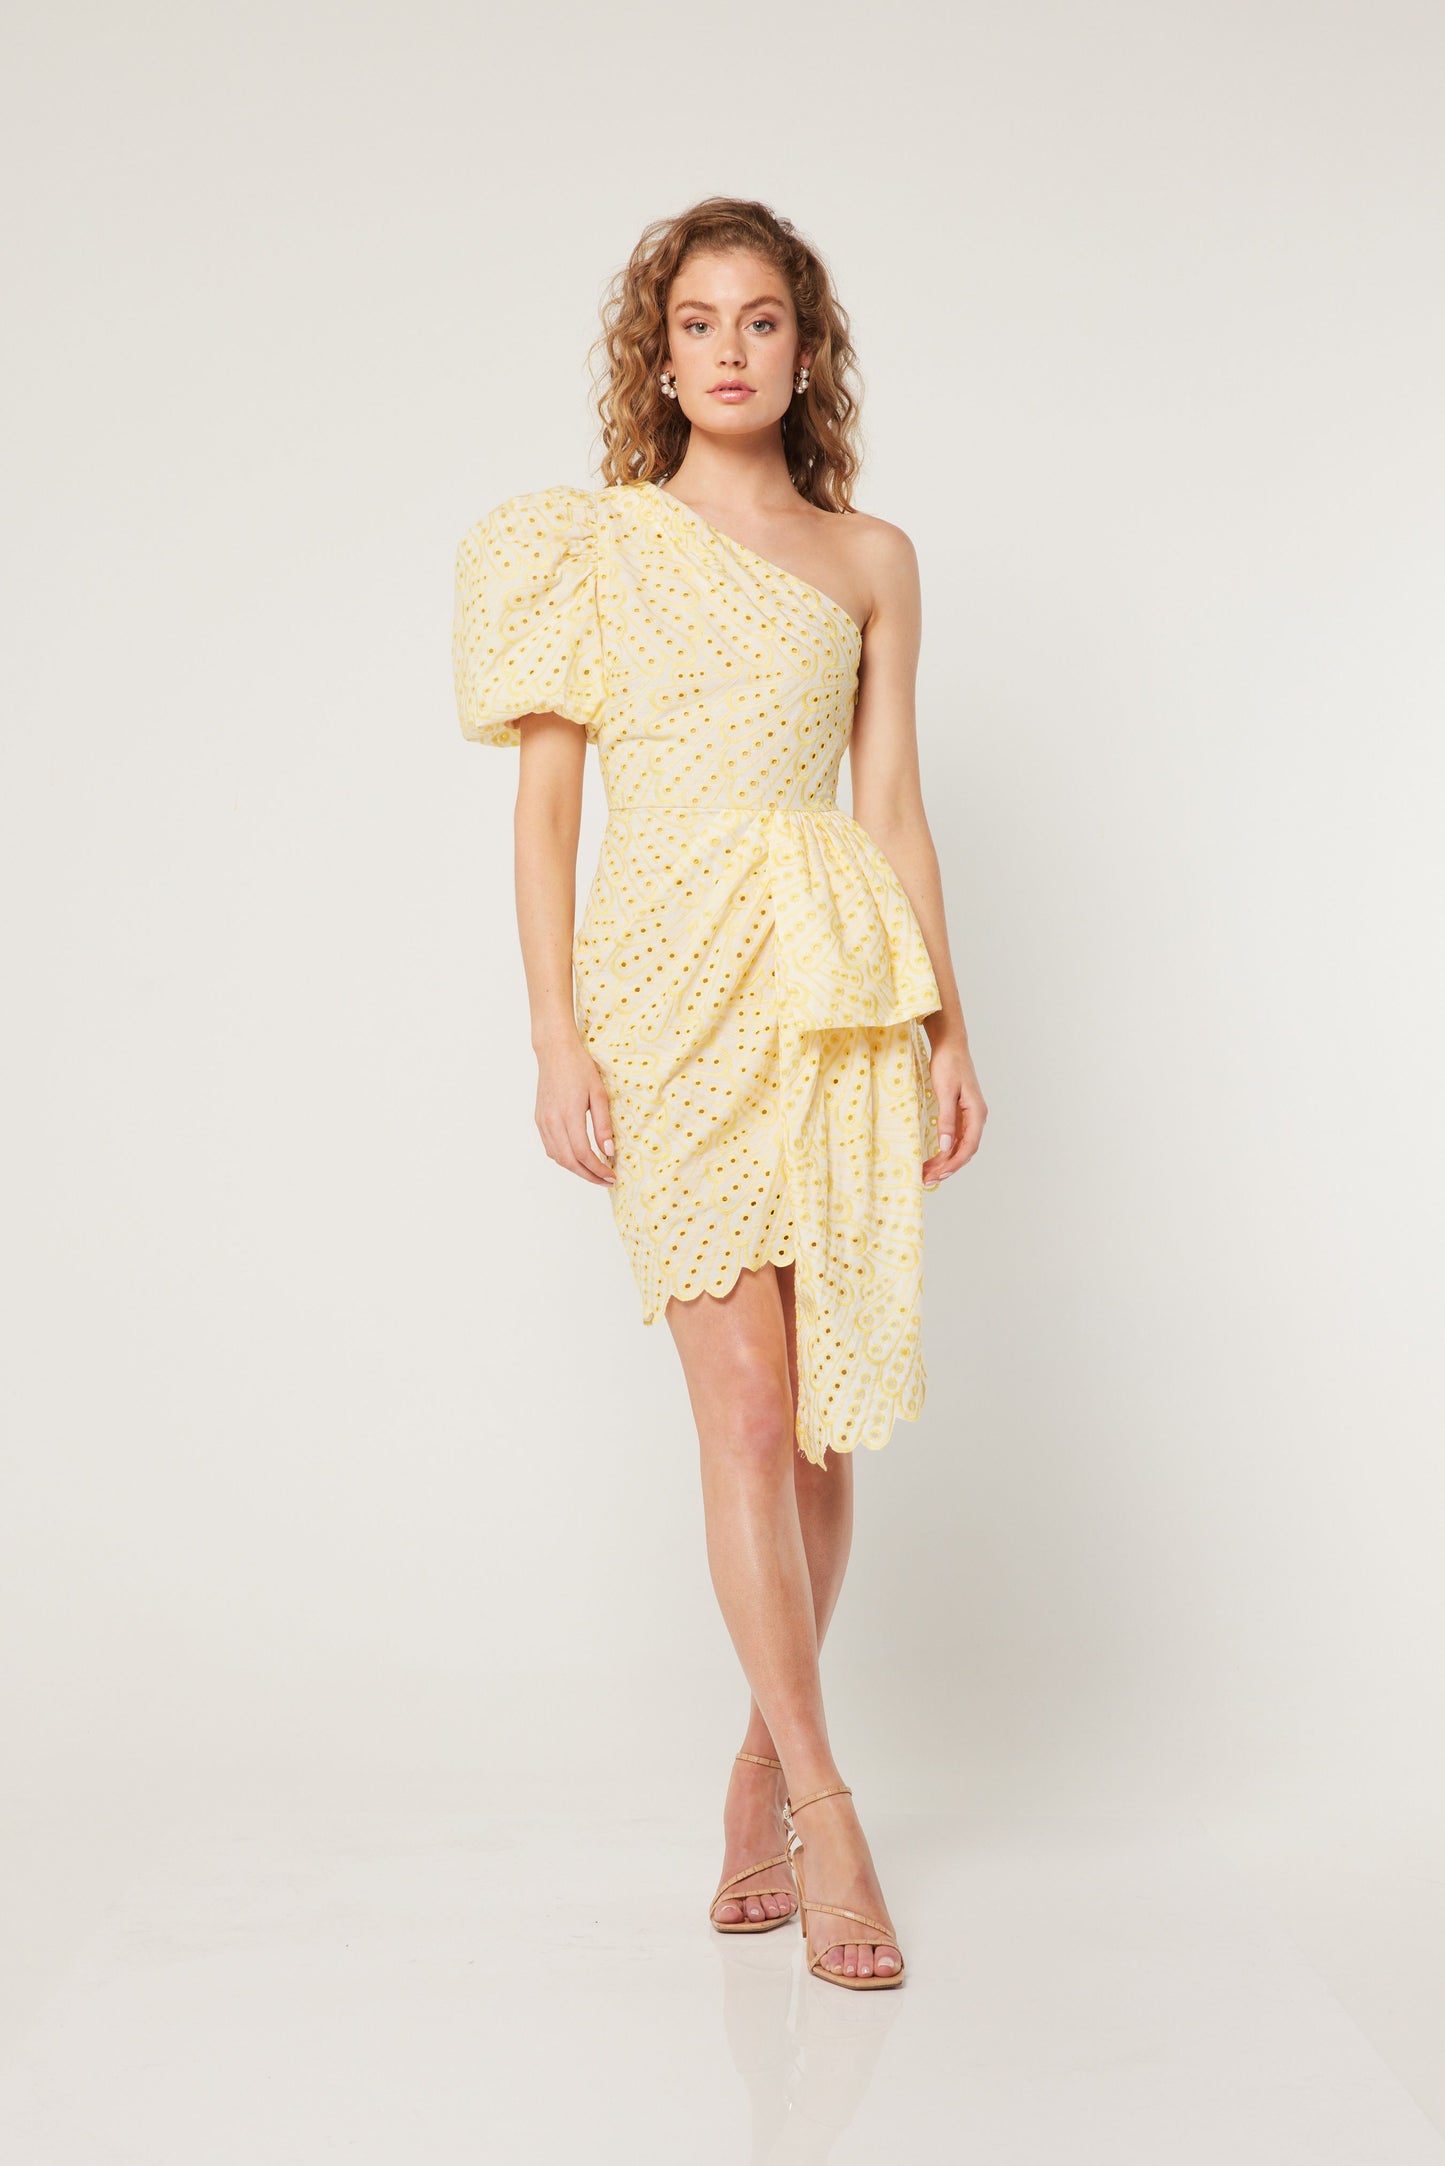 Serenity Dress Lemon XL/14